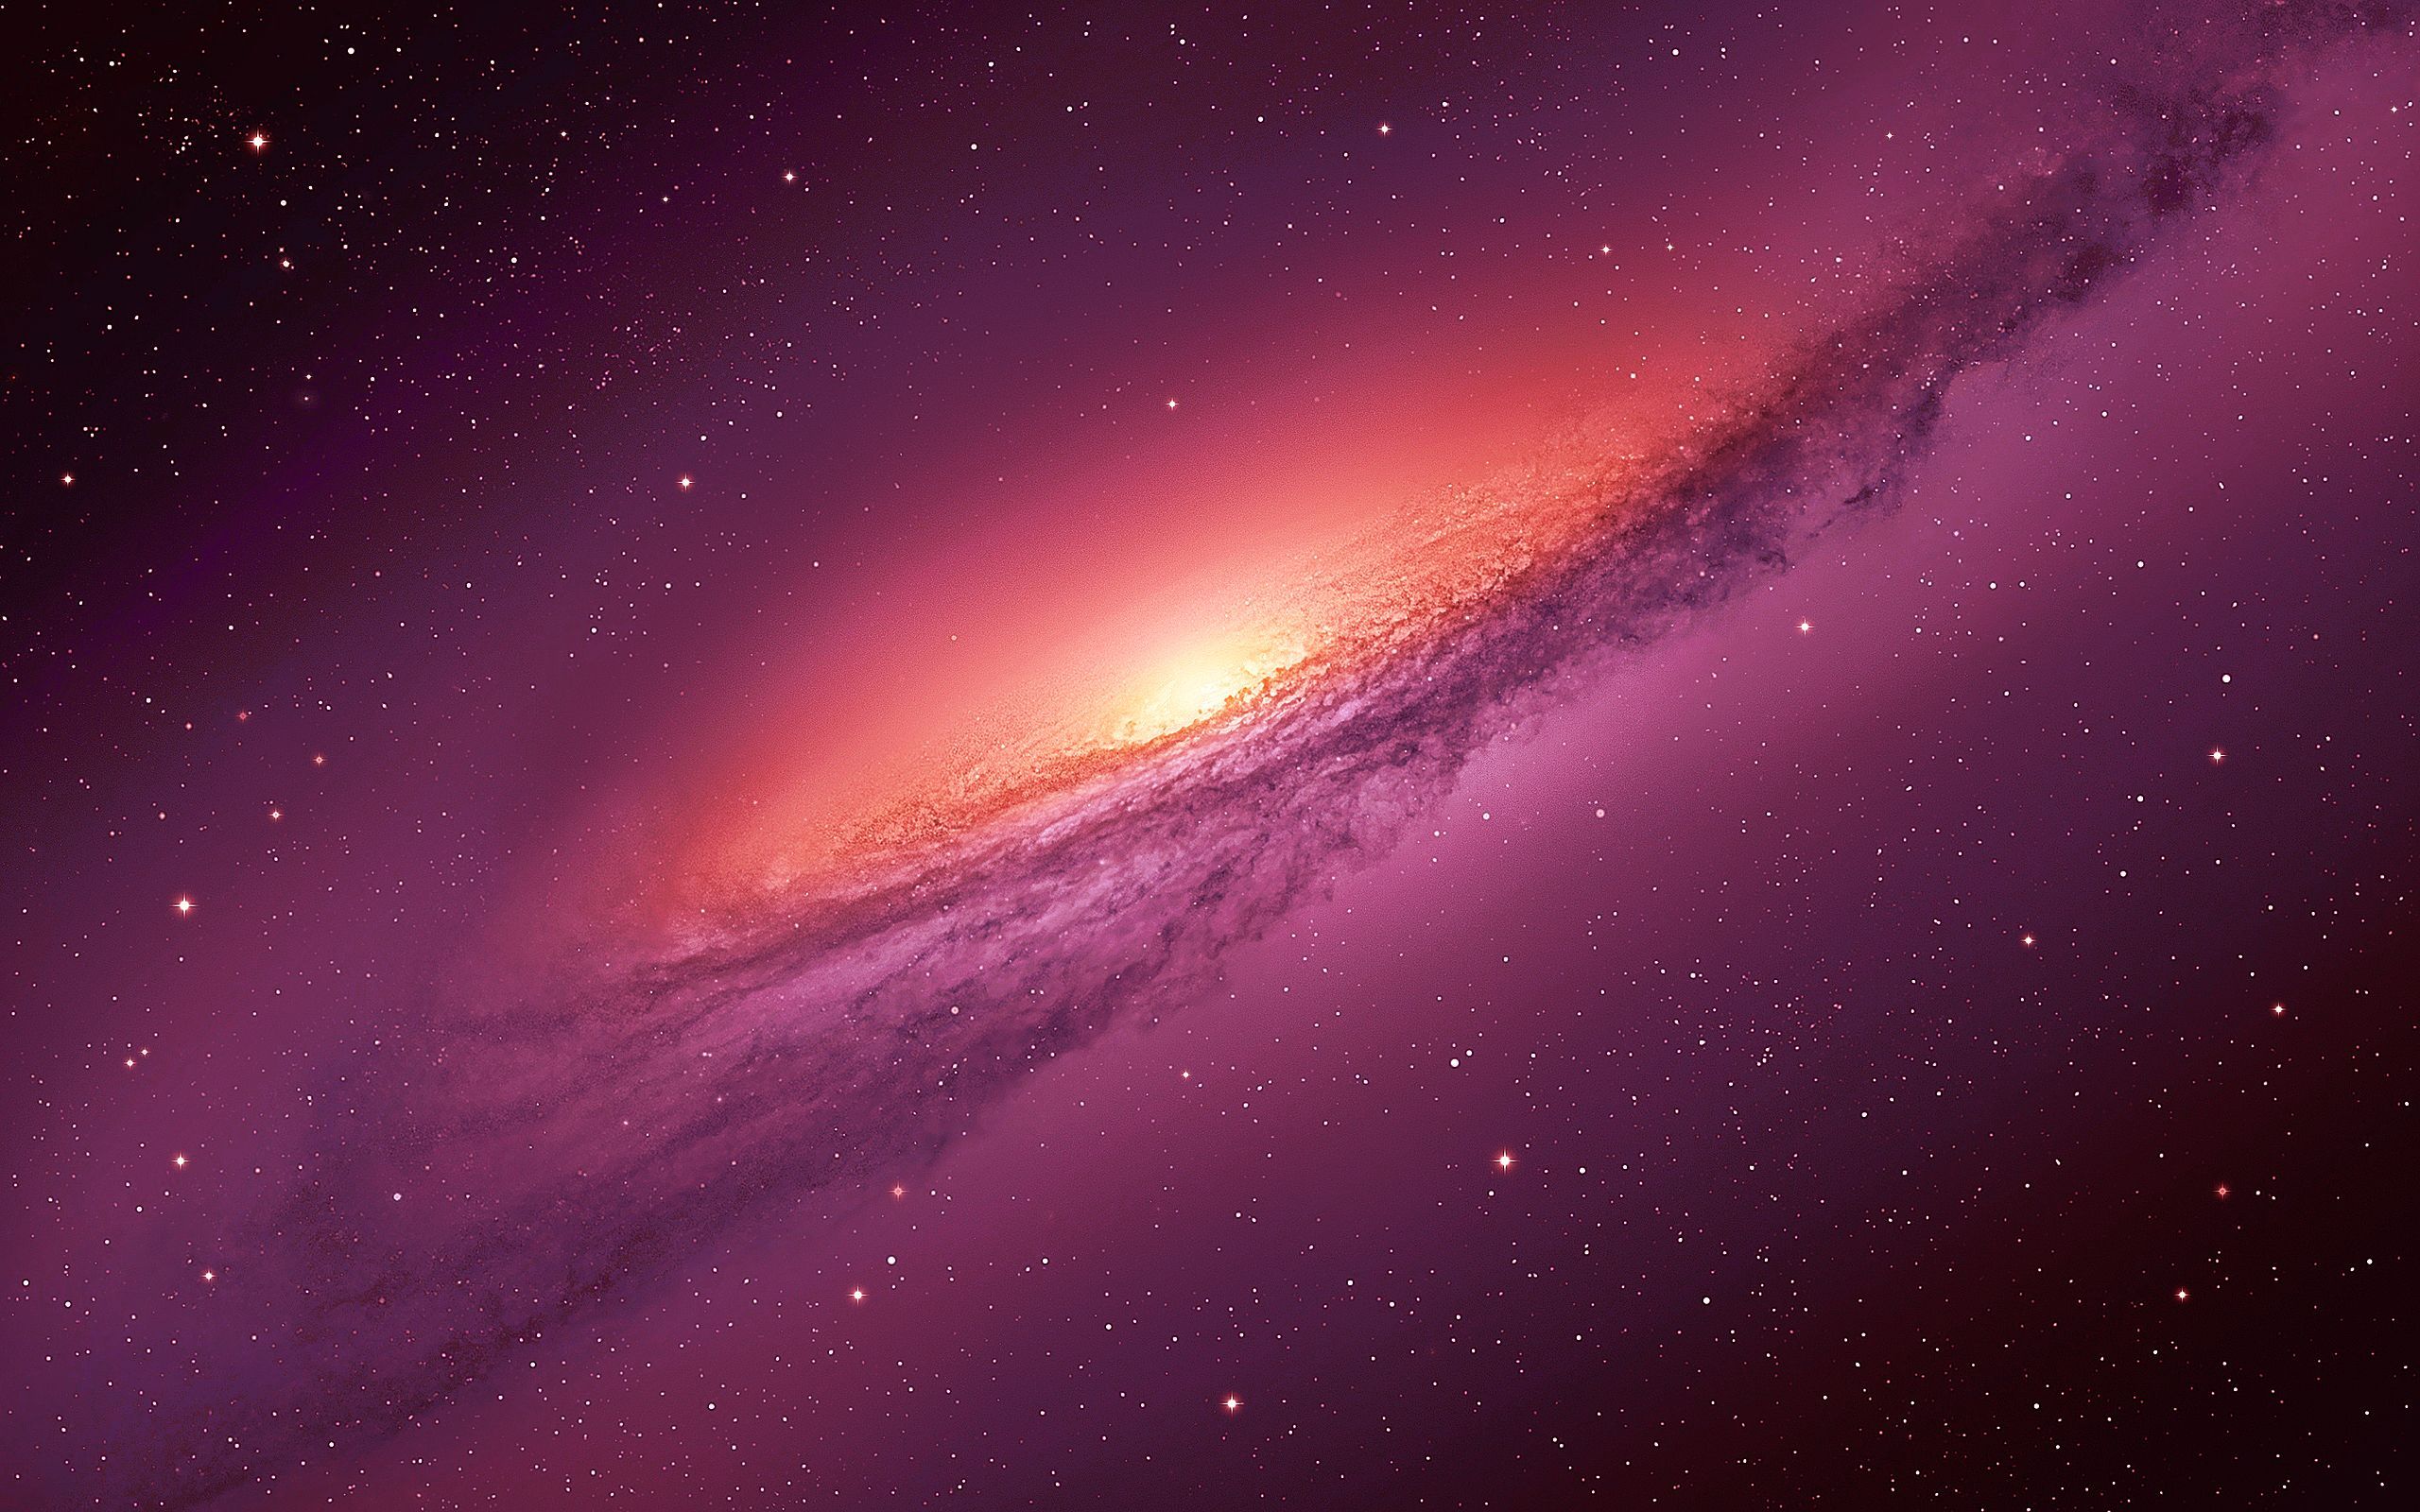 awesome Mac Os X Mountain Lion stars Galaxy sacpe background Image ...